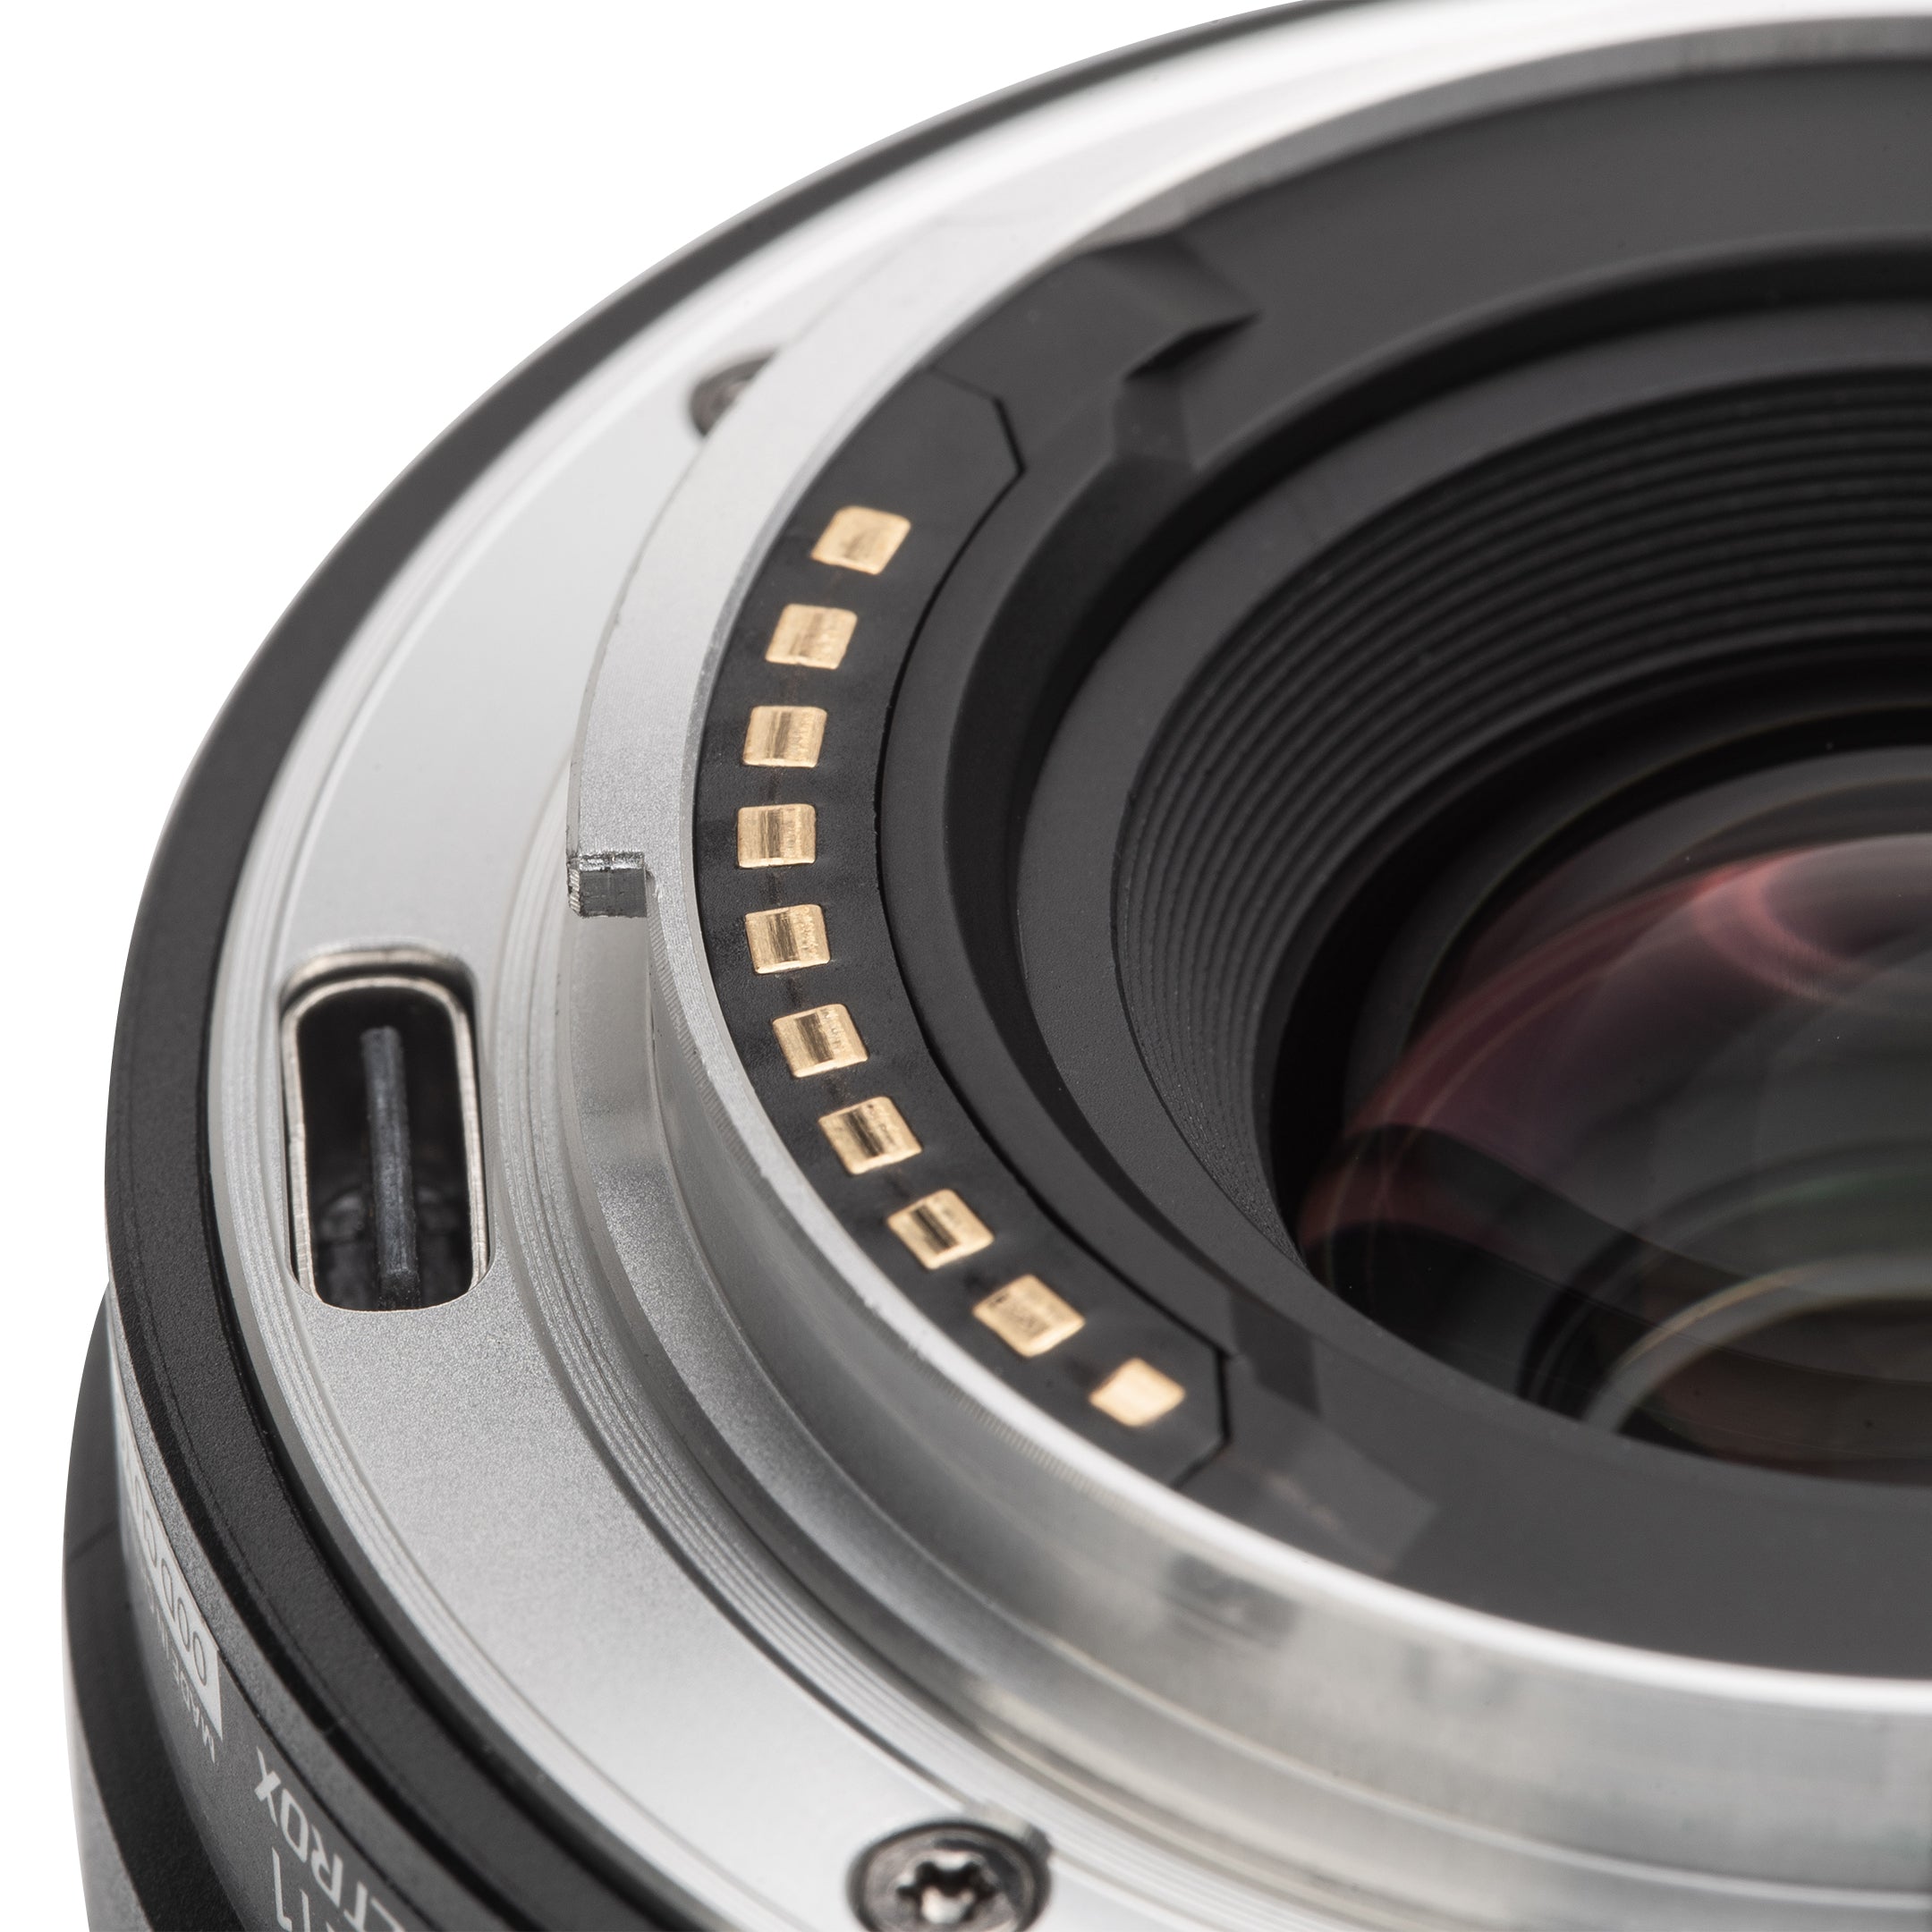 Viltrox AF 20mm F2.8 FE 157g Lighteight Wide Angle Large Aperture Auto Focus Full Frame Prime Lens For Sony E-mount